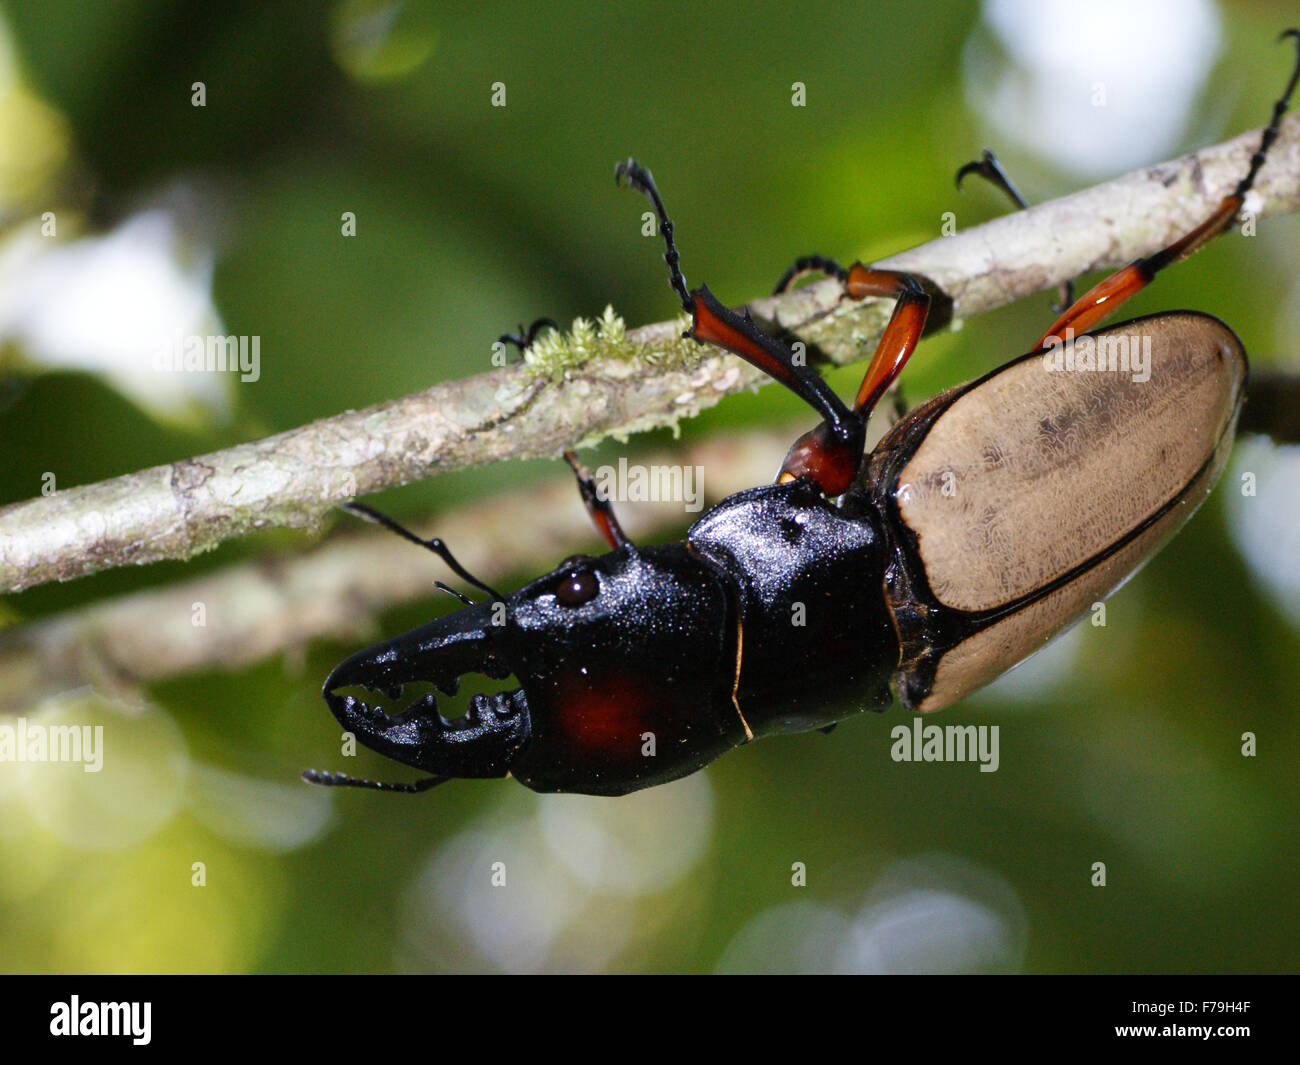 Beetle running on the branch. Rainforest Mount Kinabalu, Borneo, Malaysia. Stock Photo